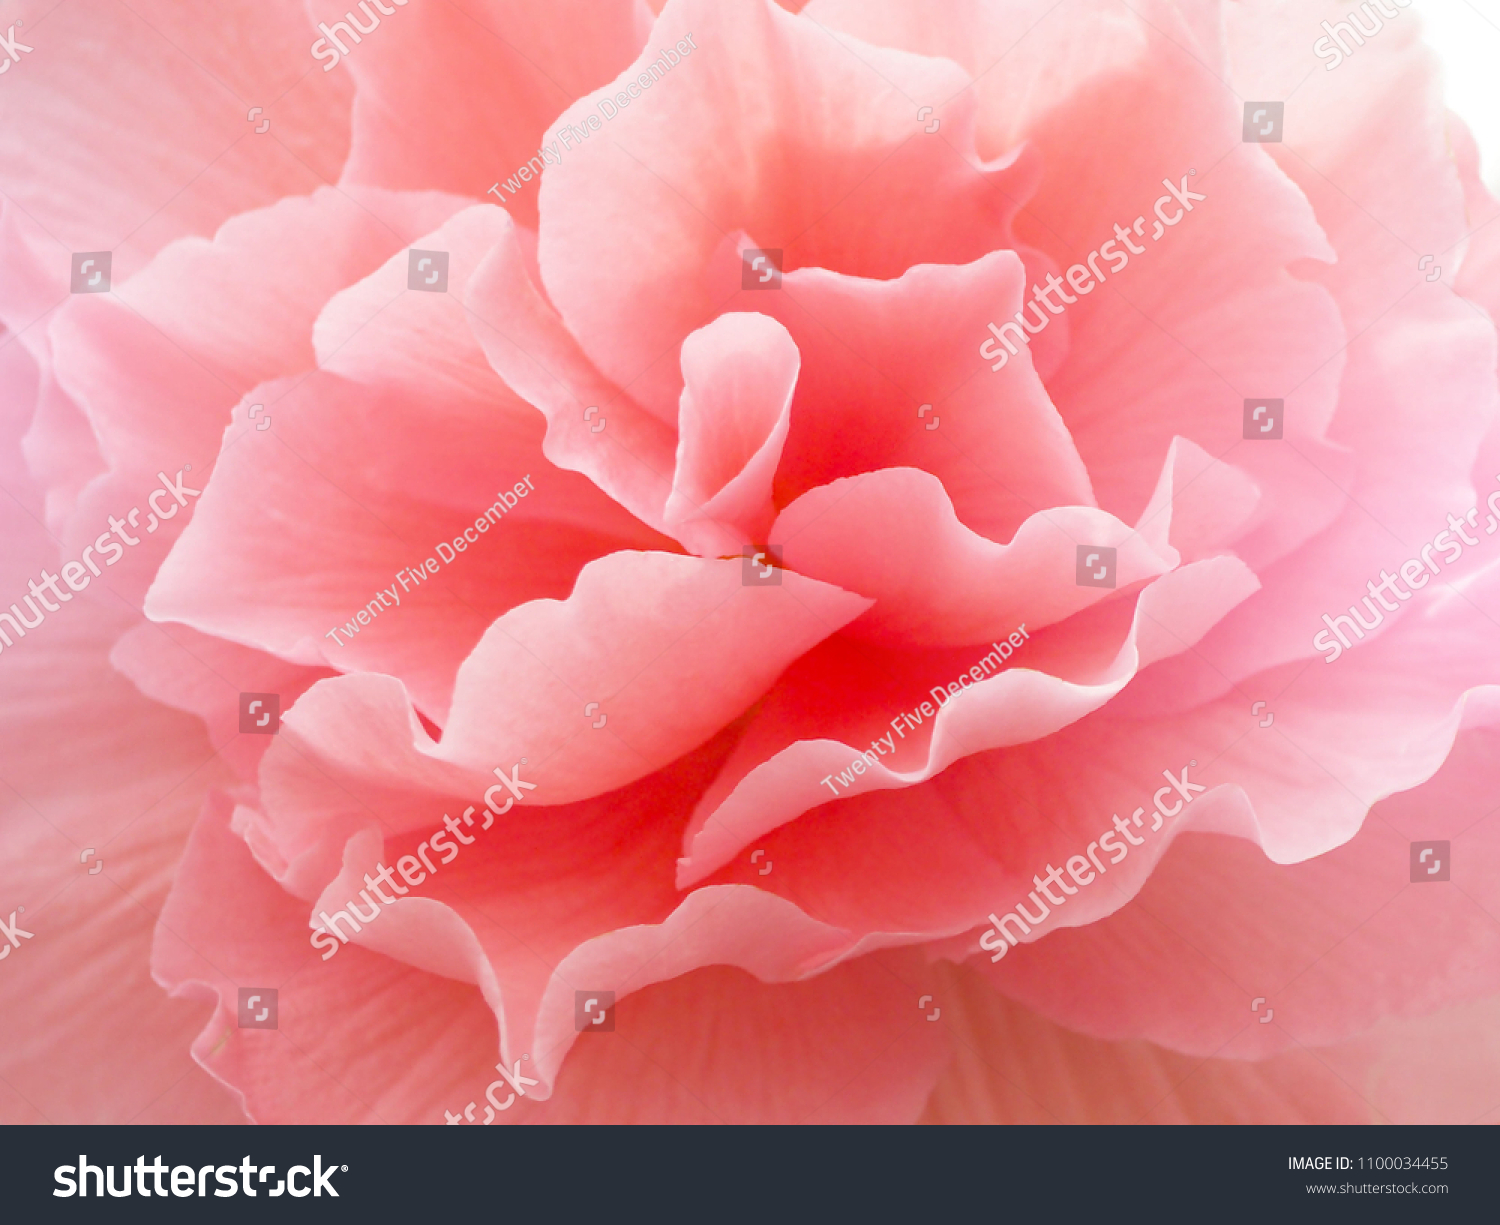 Flower pink color close-up. Background. #1100034455